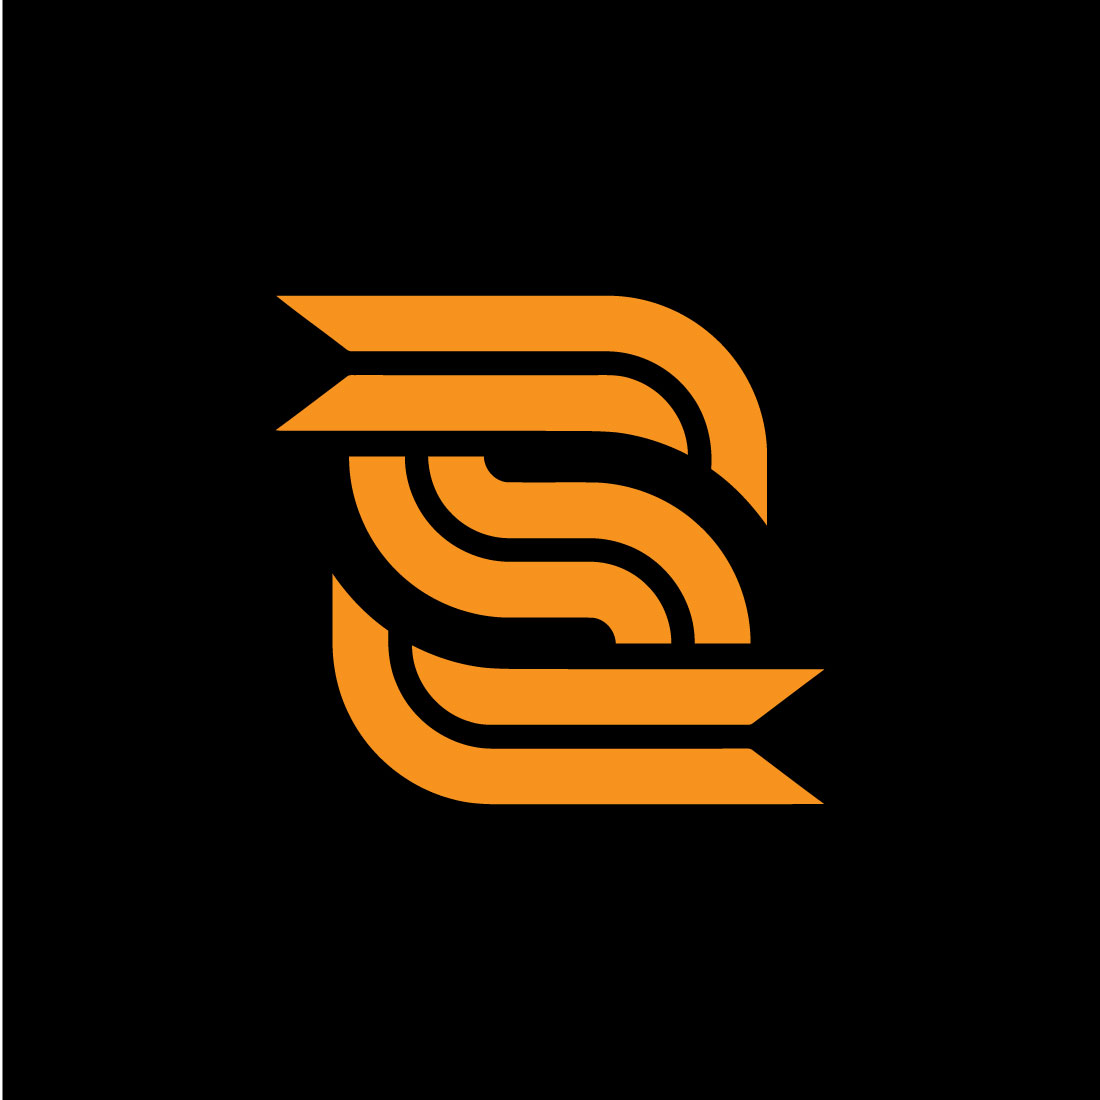 S Lettering Logo Orange Design cover image.